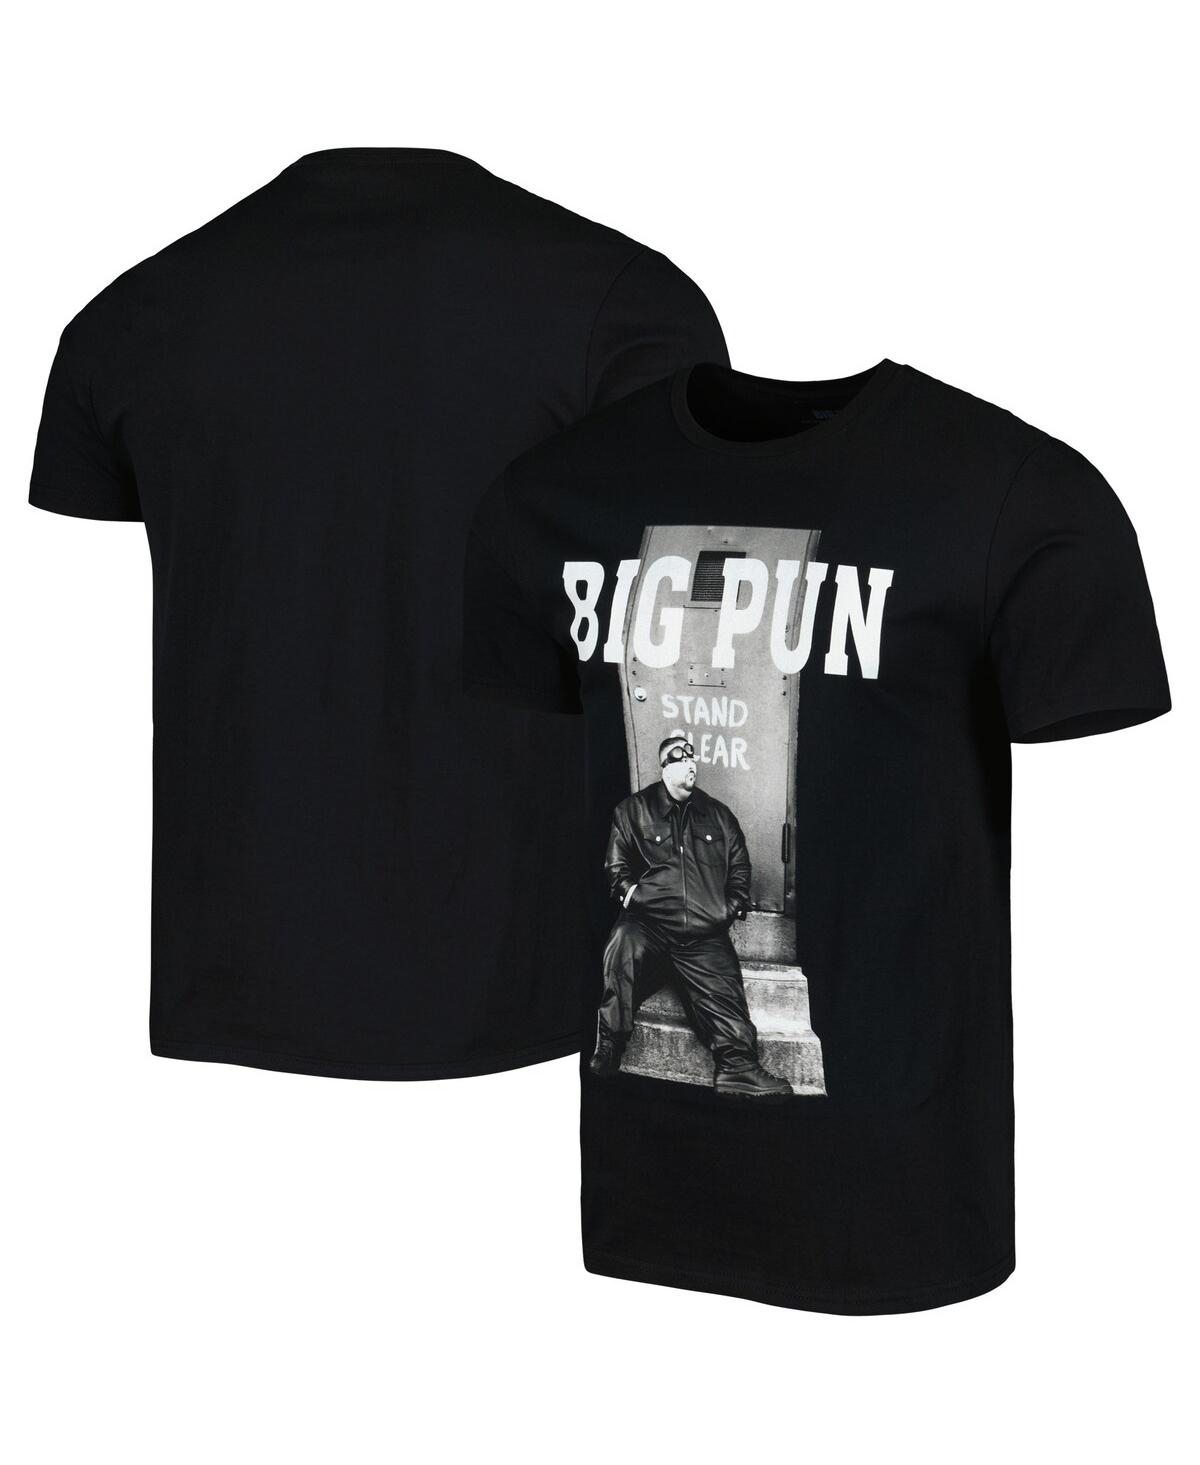 Men's and Women's Black Big Pun Graphic T-shirt - Black